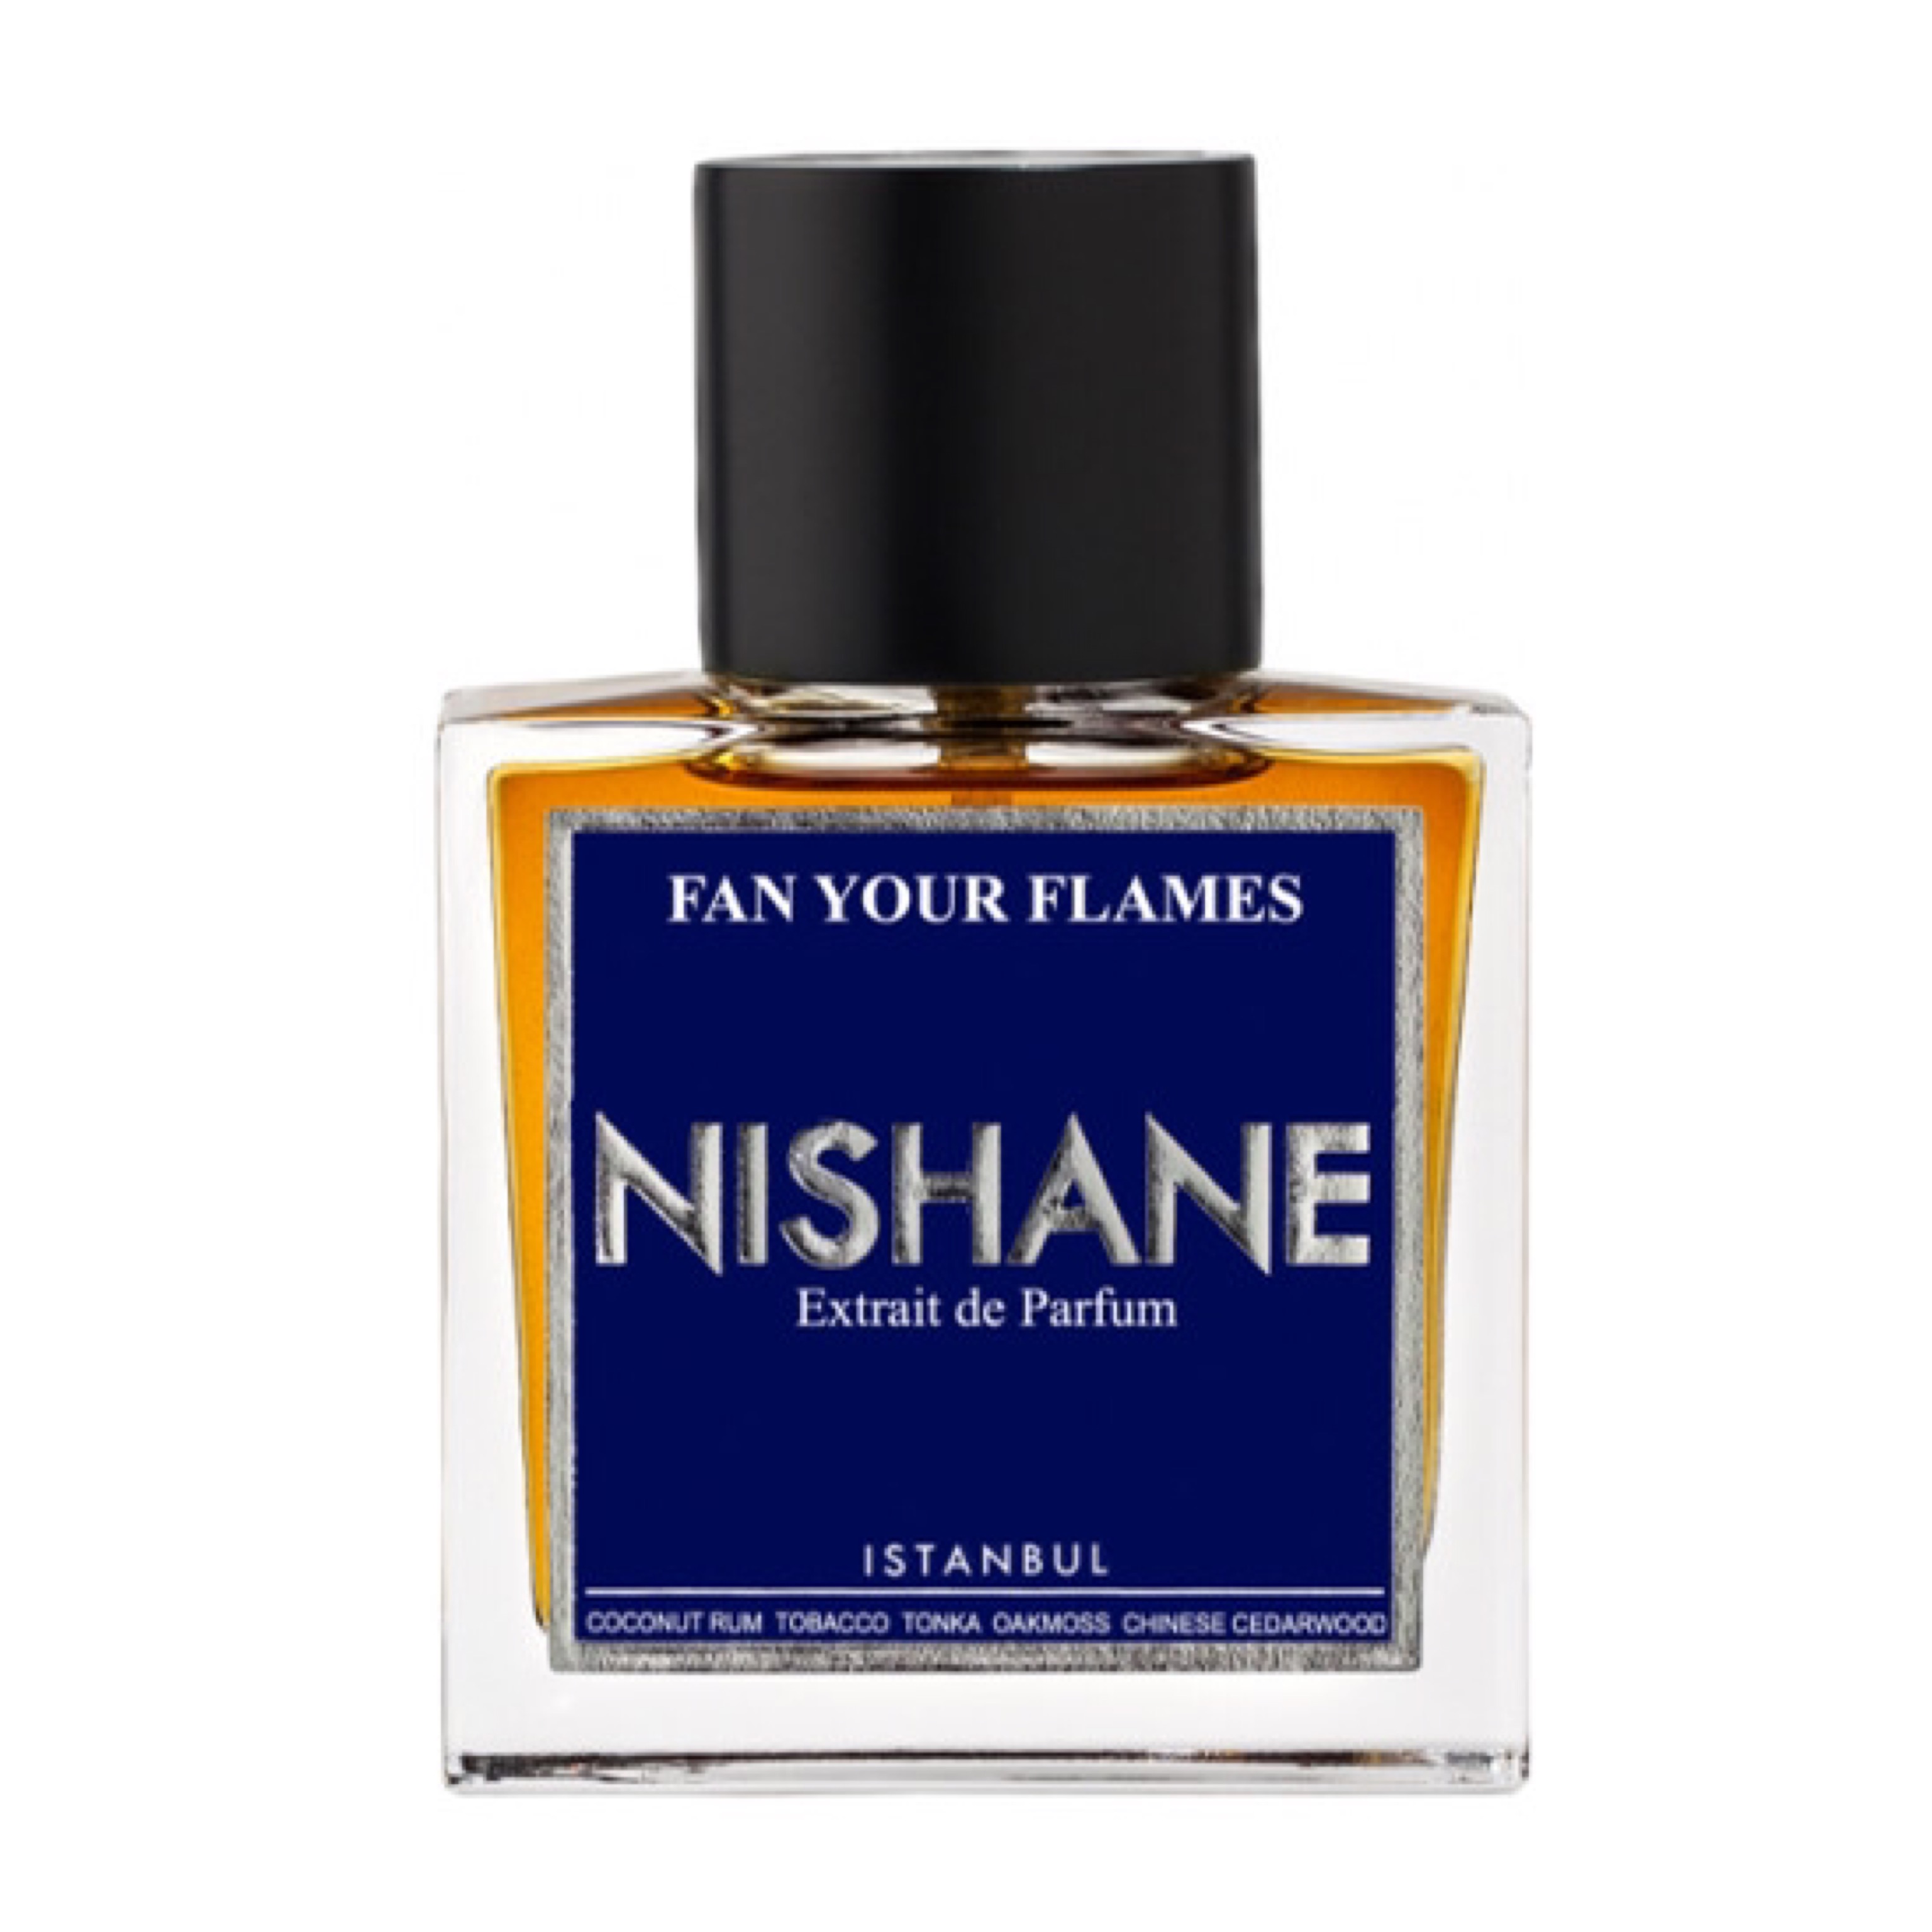 Nishane-Fan Your Flames